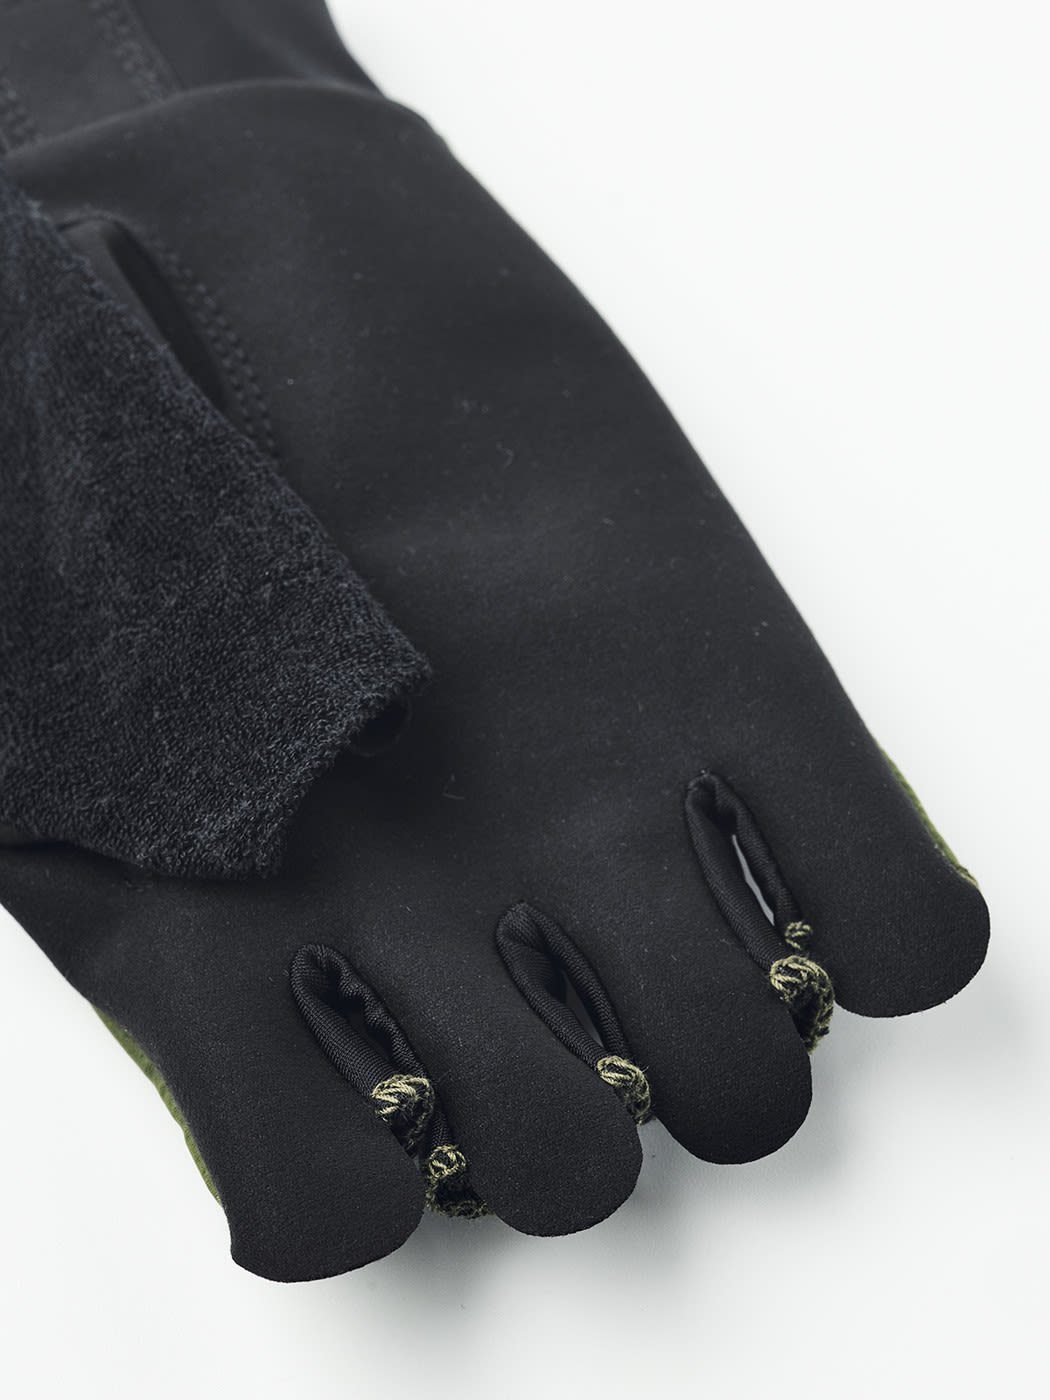 Black Short Accessoires Fleecehandschuhe - Hestra Sprint Hestra Green